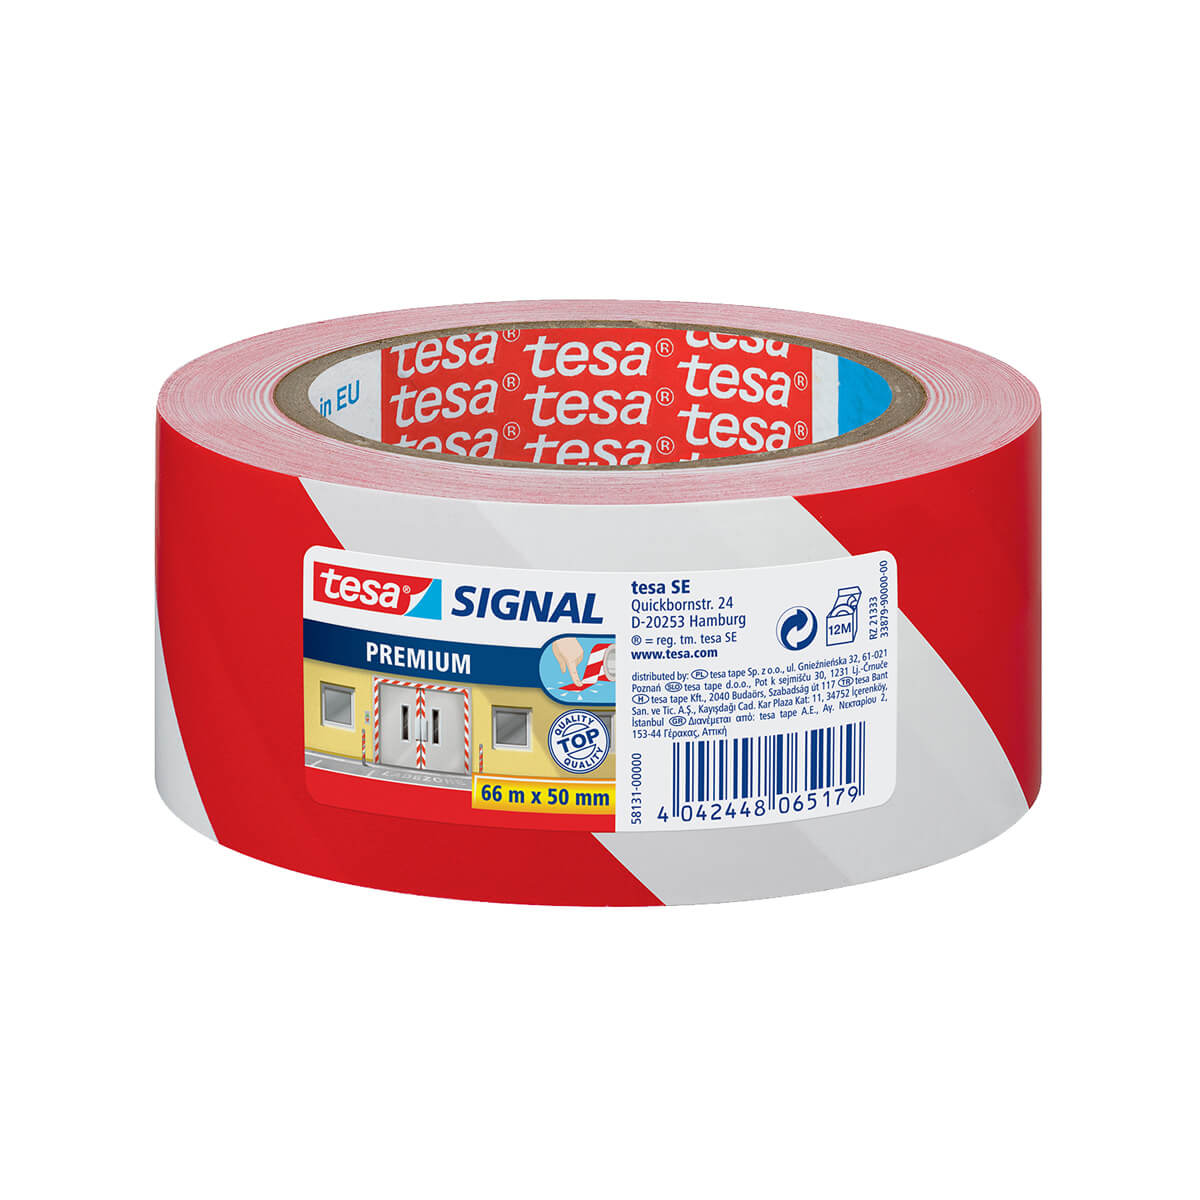 tesa Signal Premium marking tape pvc - 66 m x 50 mm - Red-White